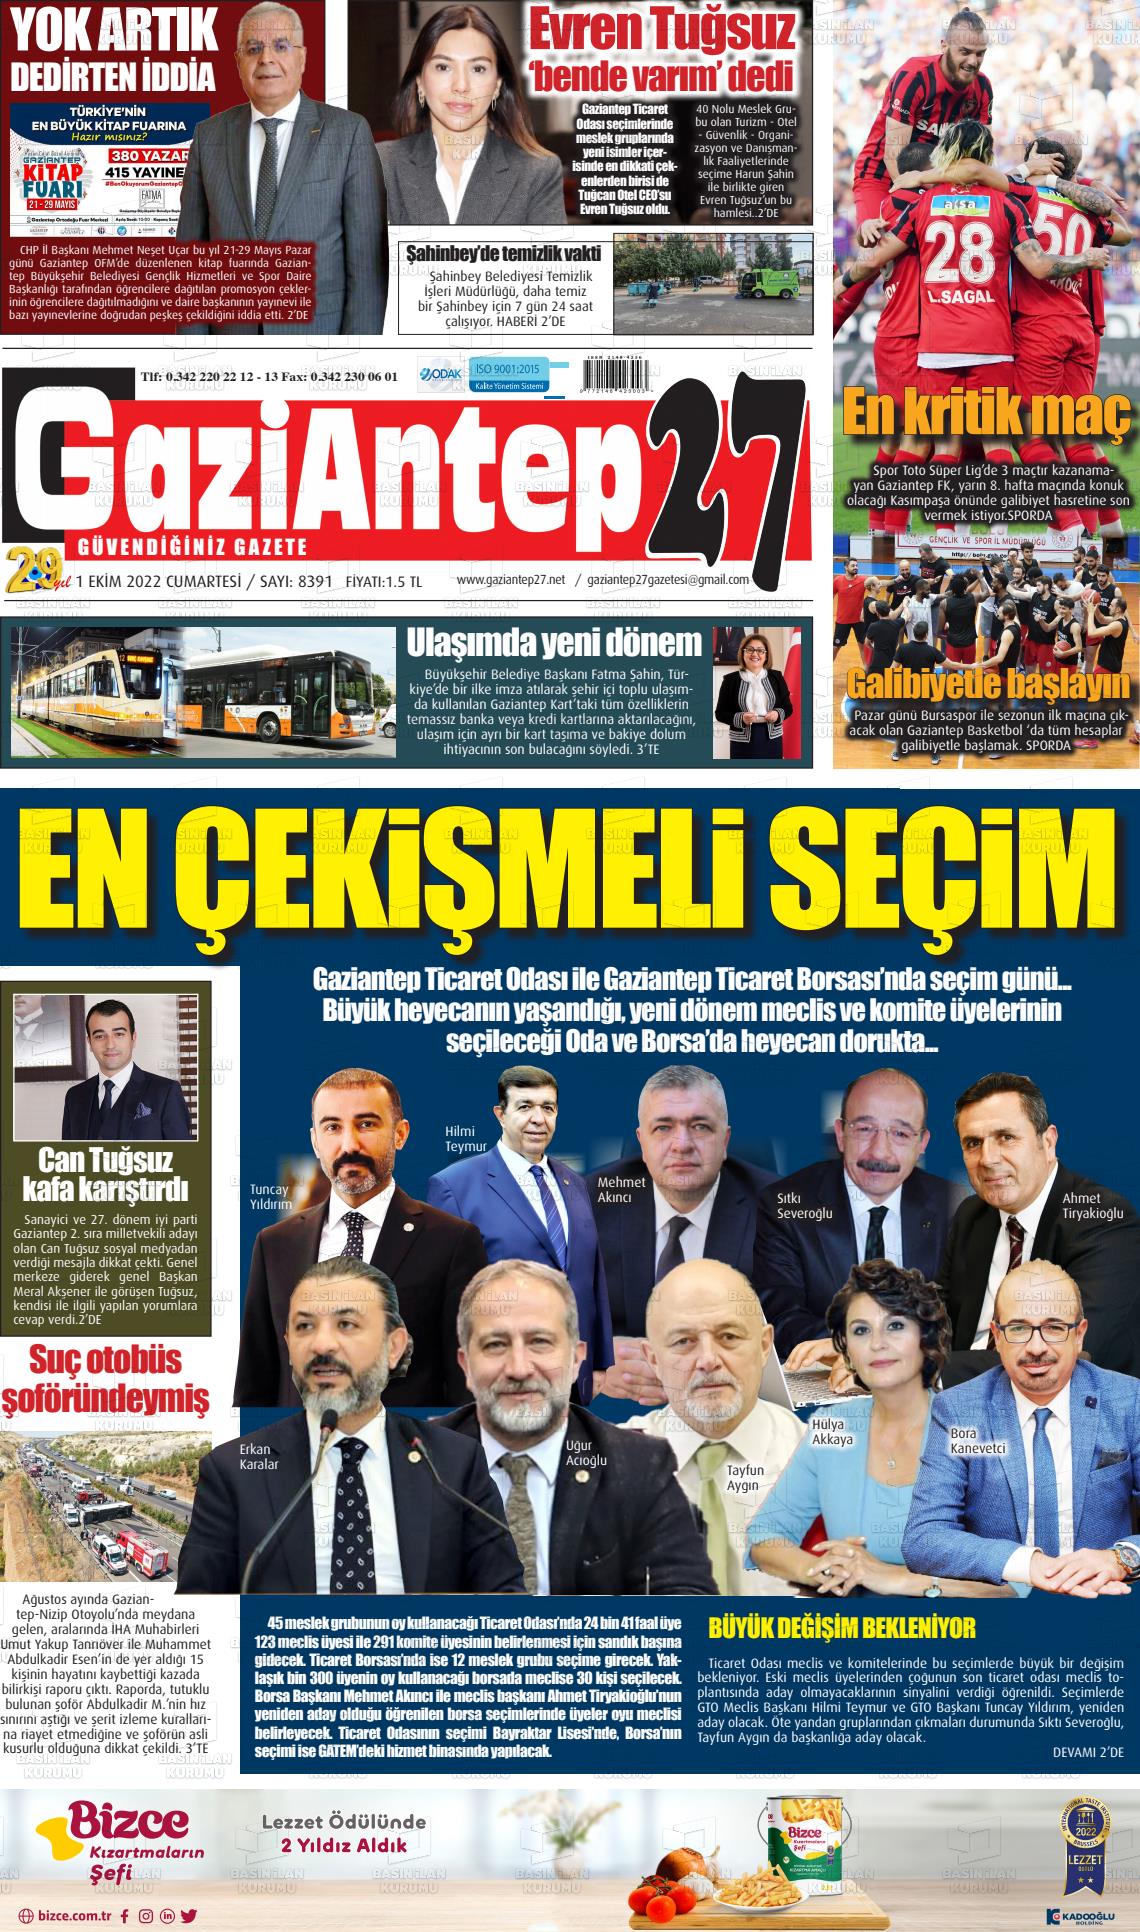 01 Ekim 2022 Gaziantep 27 Gazete Manşeti